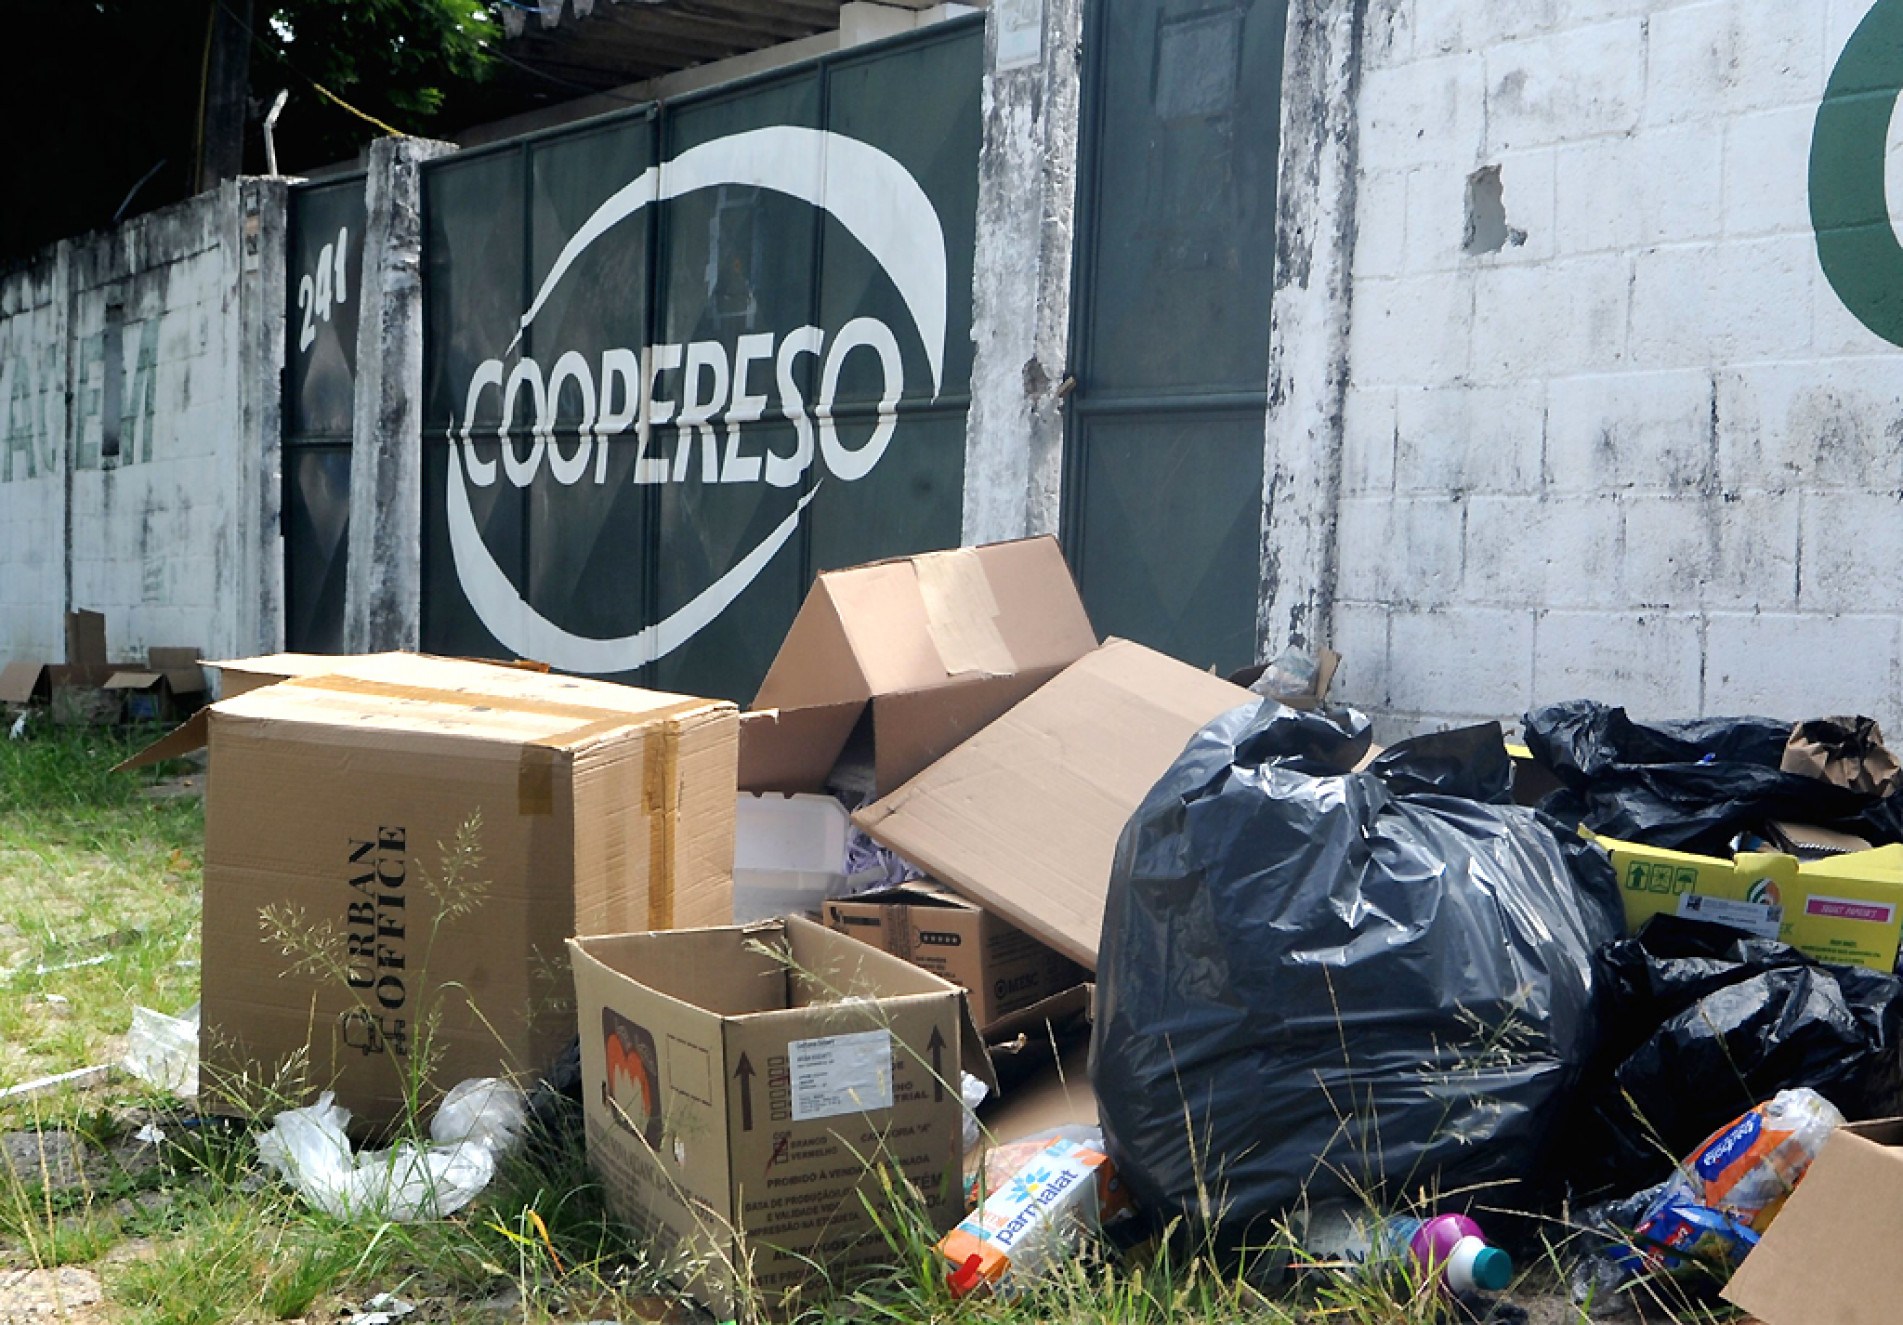 Lixo depositado em frente ao local preocupa moradores do entorno